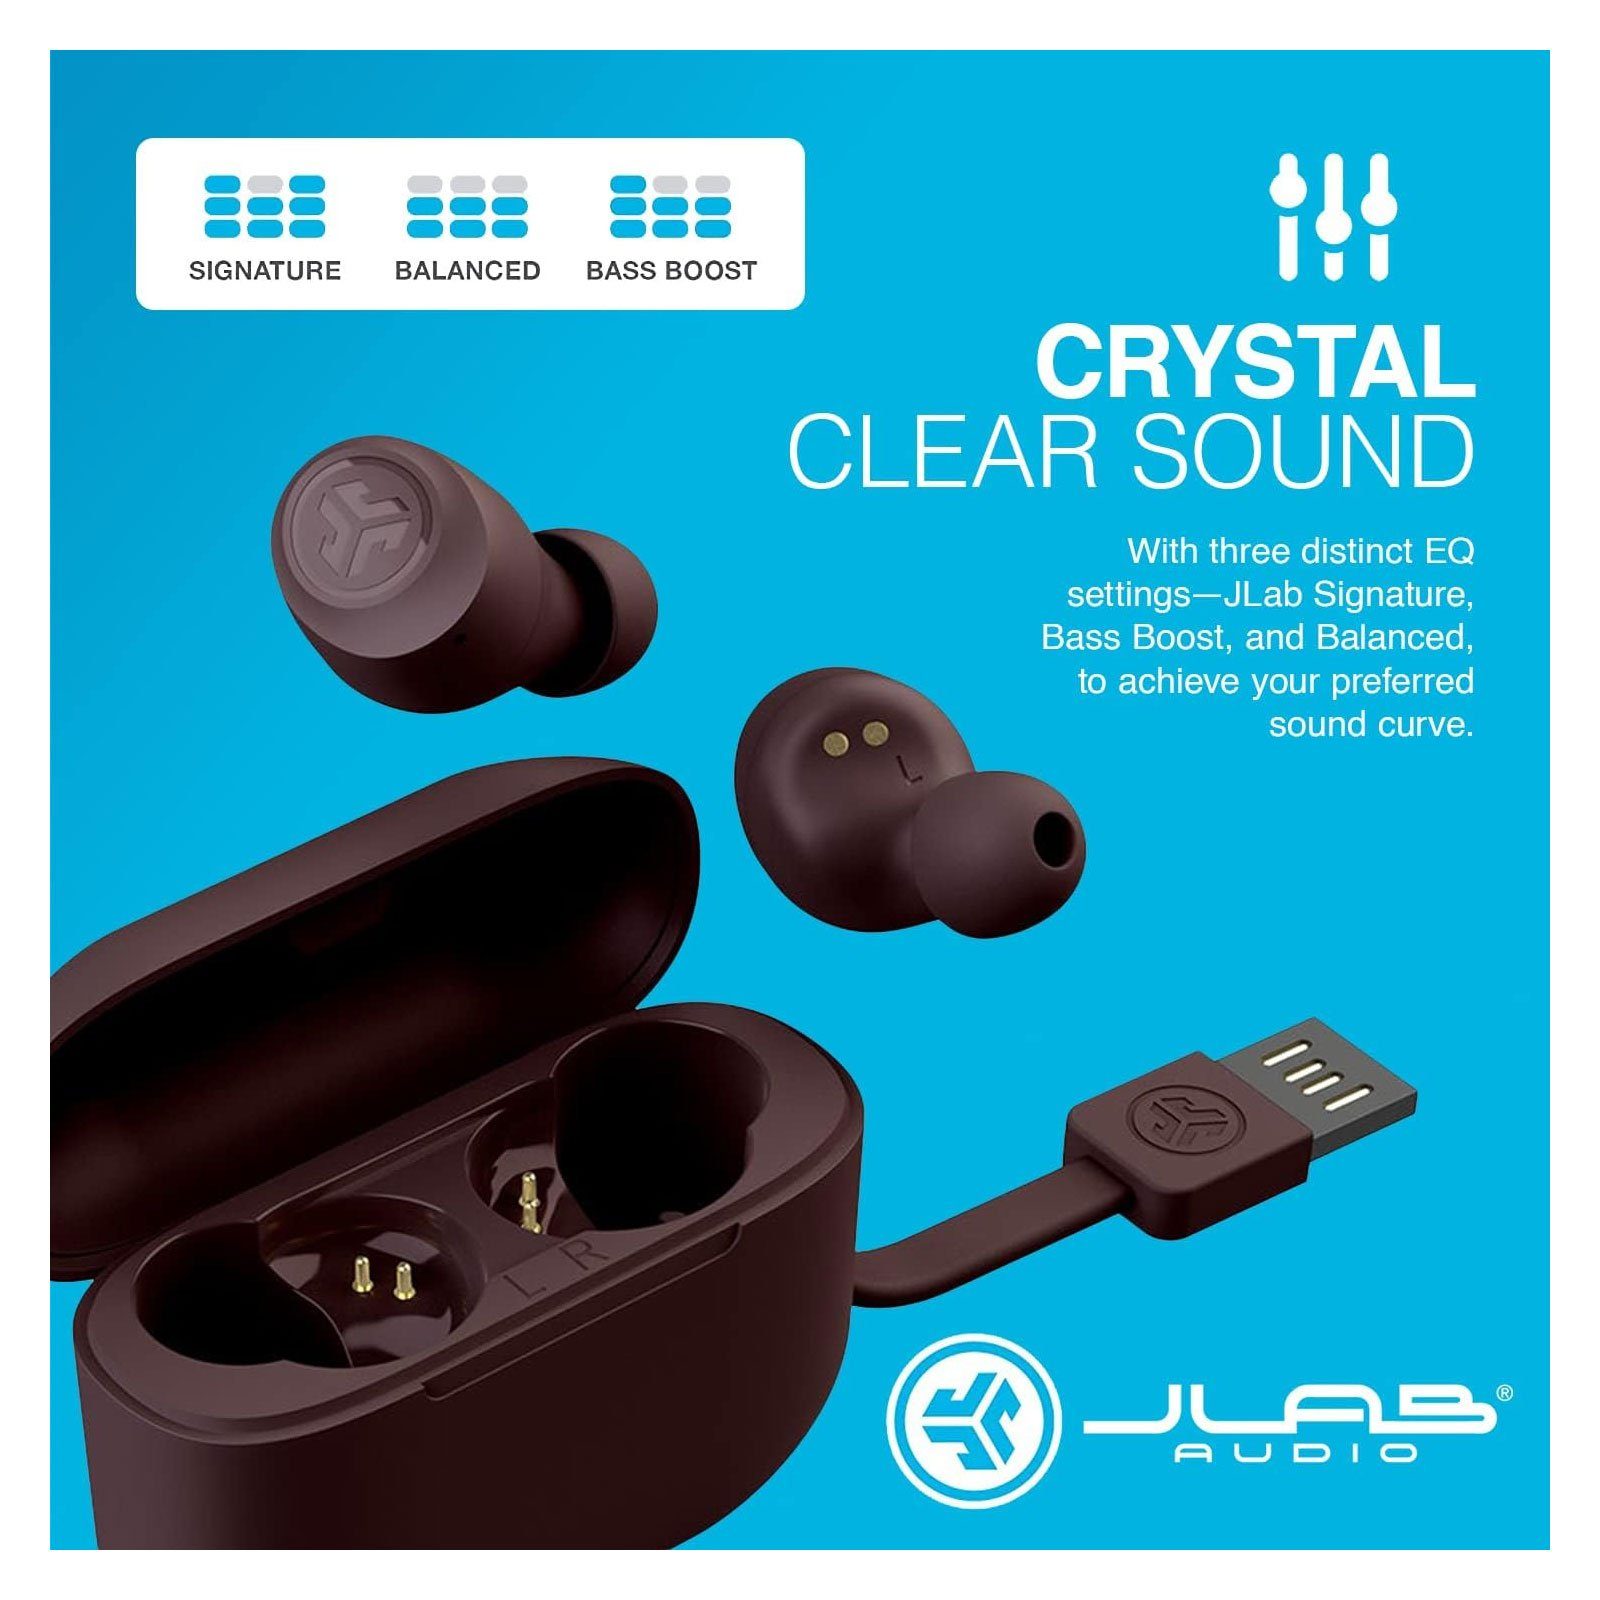 Hauttöne) Go EQ3-Sound, In-Ear-Kopfhörer True Earbuds Air Bluetooth, USB-Ladecase, Jlab 4975 Tones Pantone Touch, Wireless (TWS,